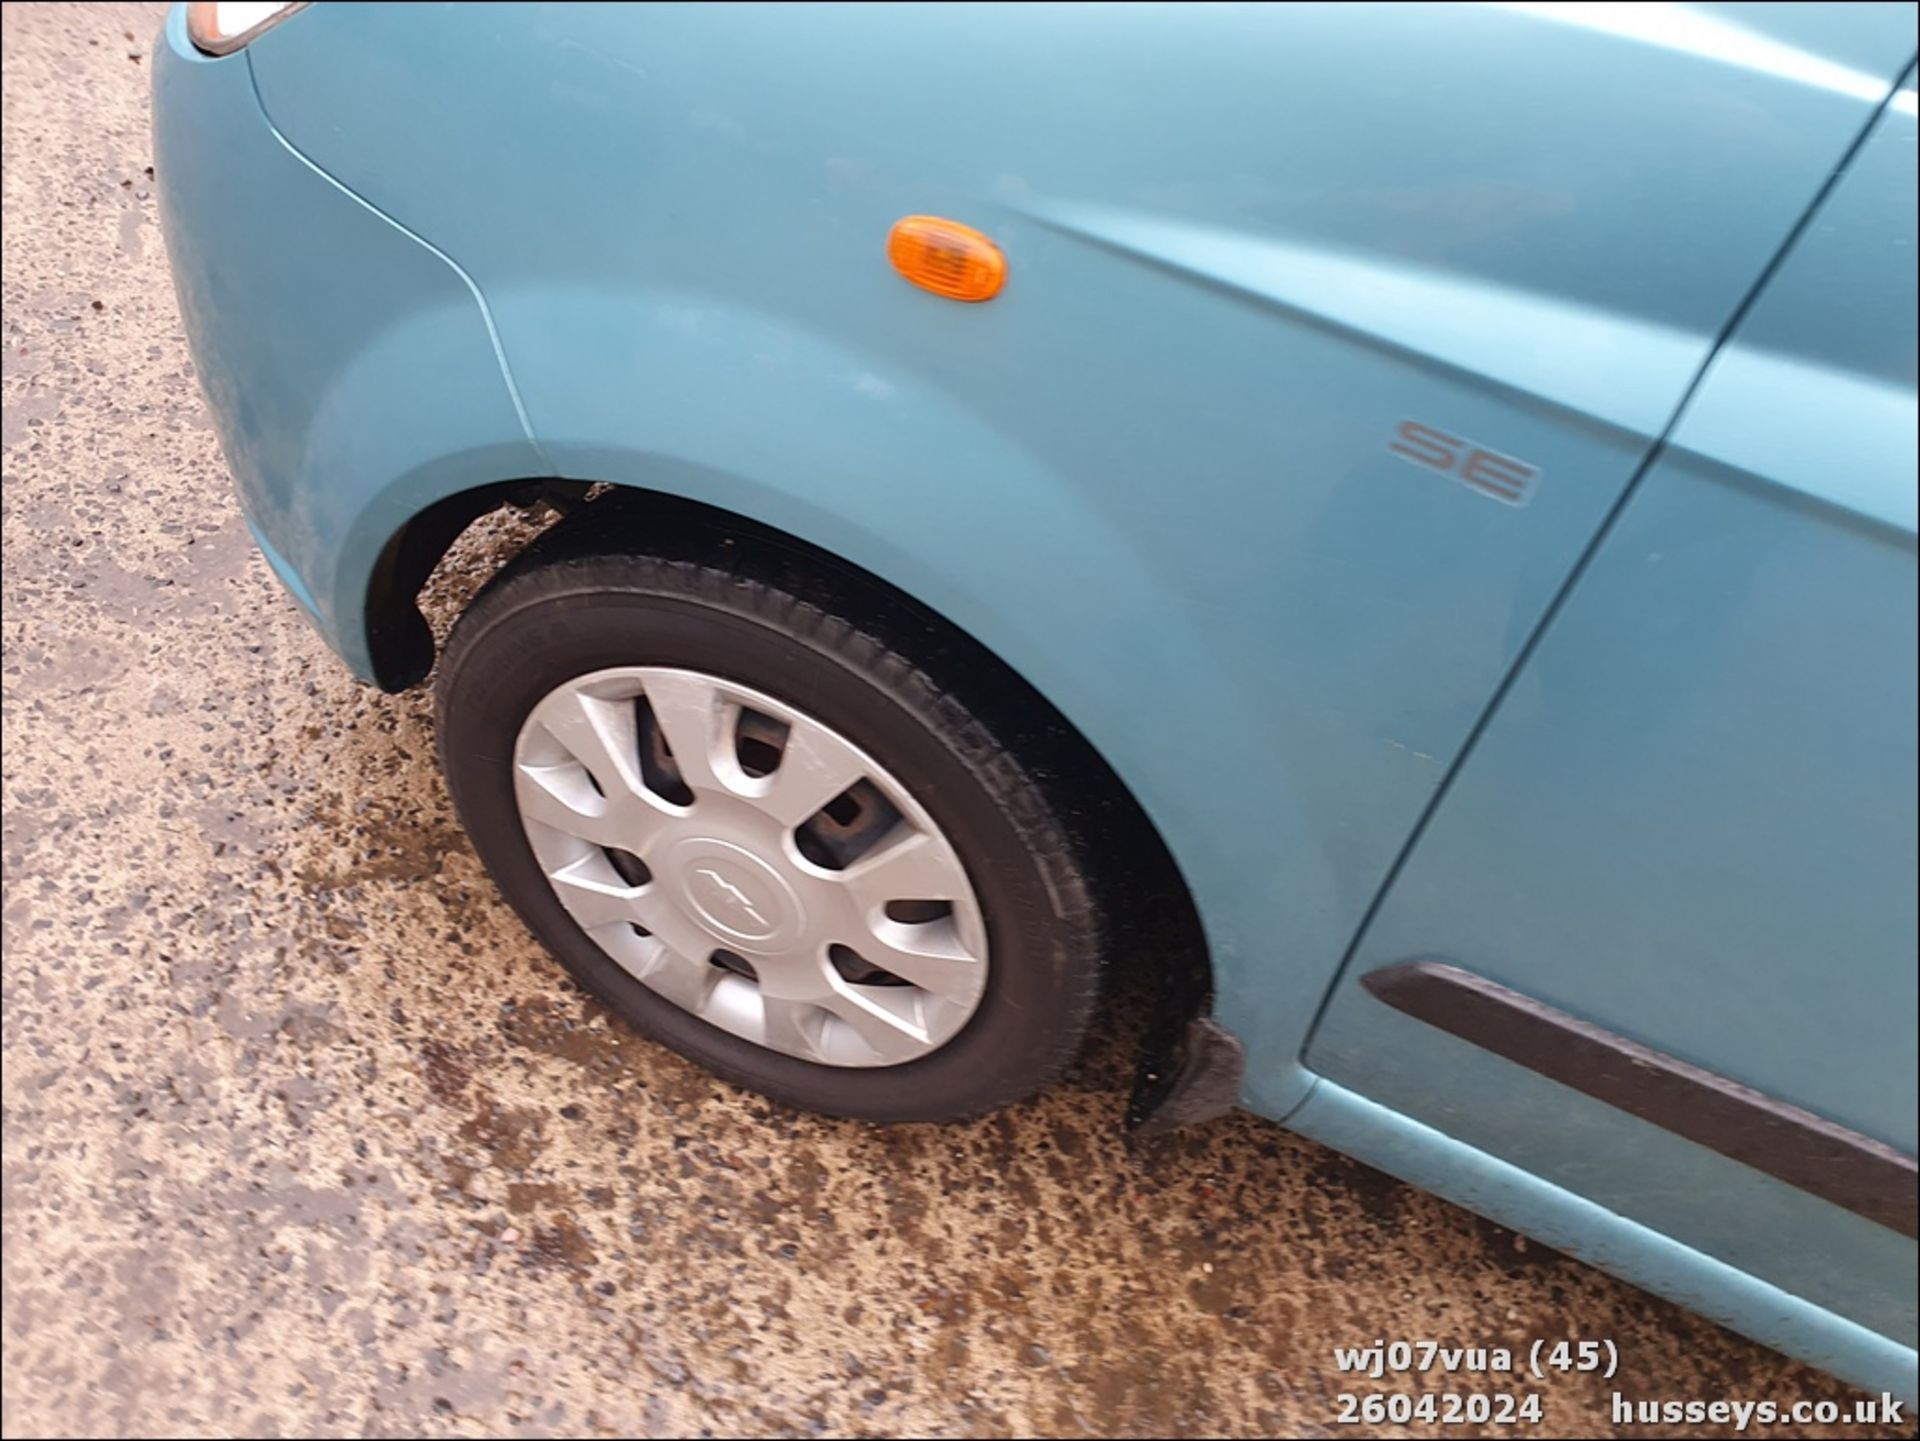 07/07 CHEVROLET MATIZ SE AUTO - 796cc 5dr Hatchback (Blue, 36k) - Image 46 of 56